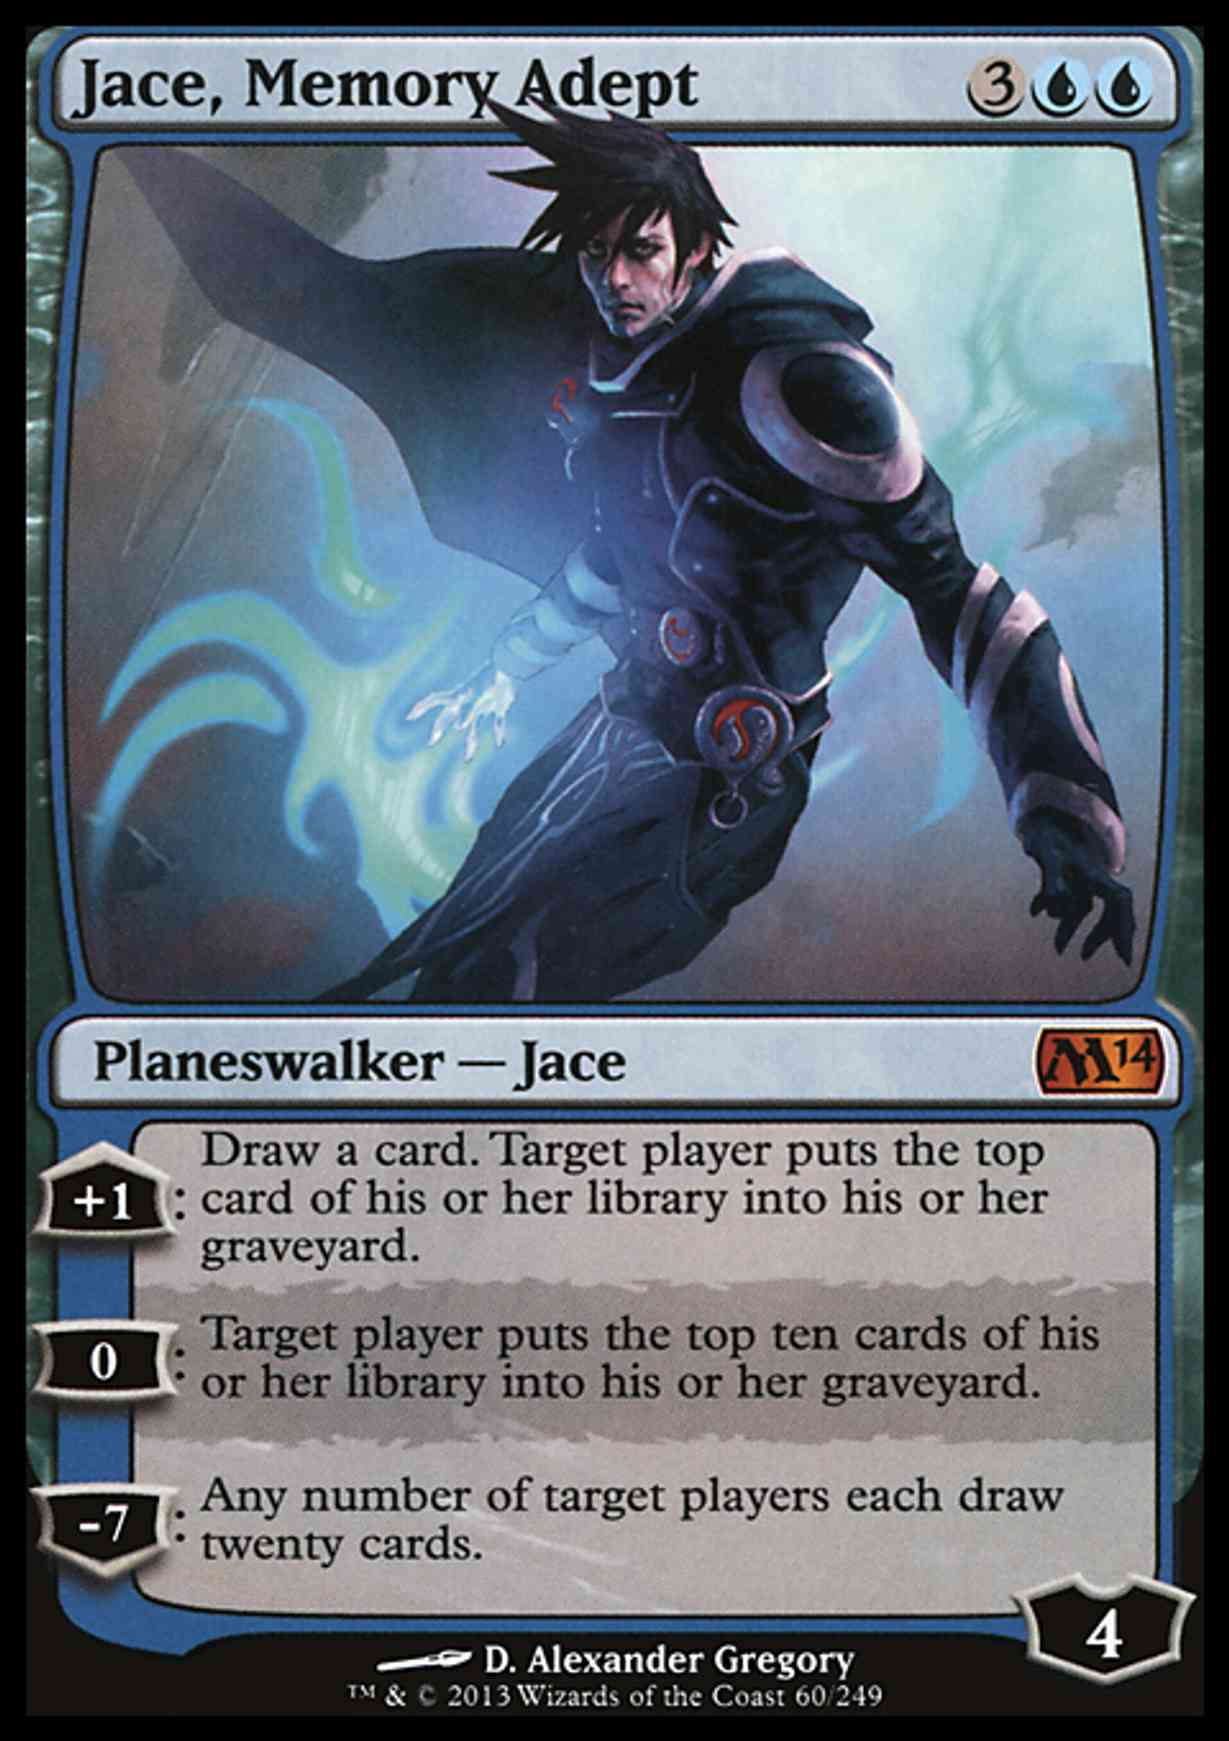 Jace, Memory Adept magic card front